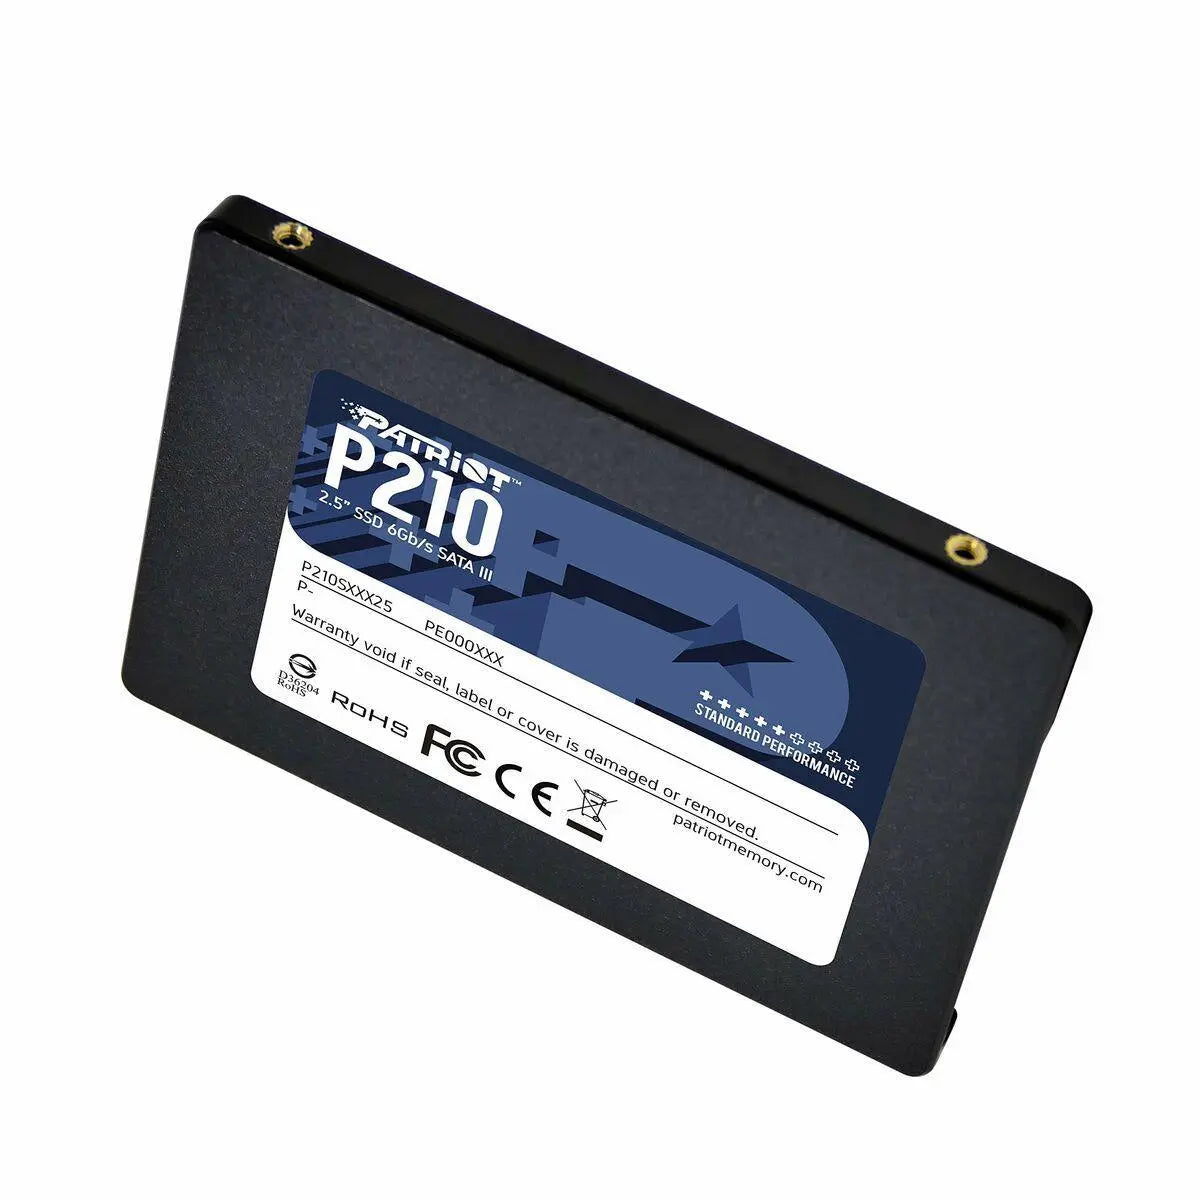 Hard Drive Patriot Memory P210 256 GB SSD - IGSI Europe Ltd